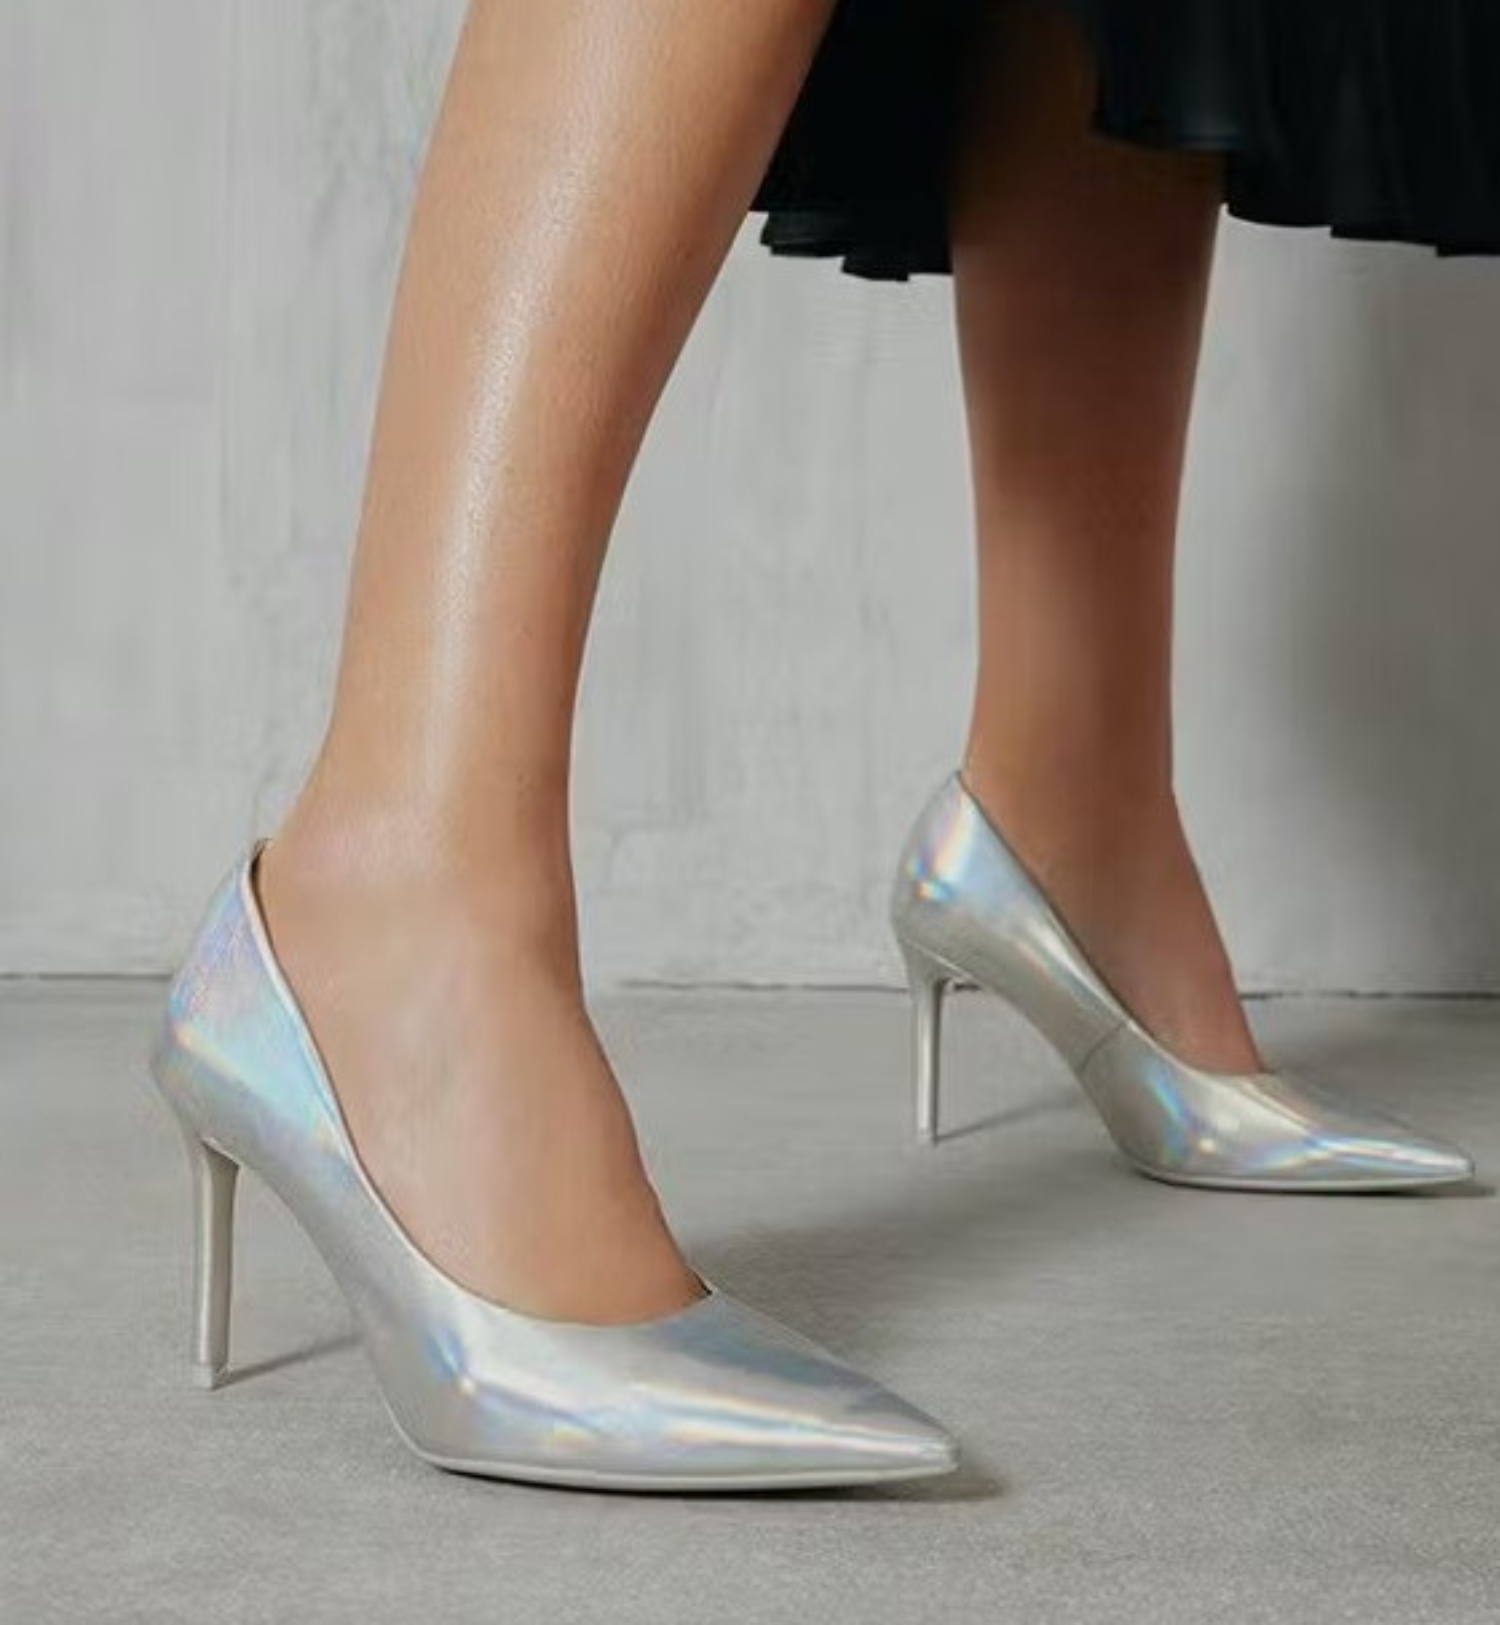 Claire Flowers high heels | Woman creates her own high heel line | ksdk.com